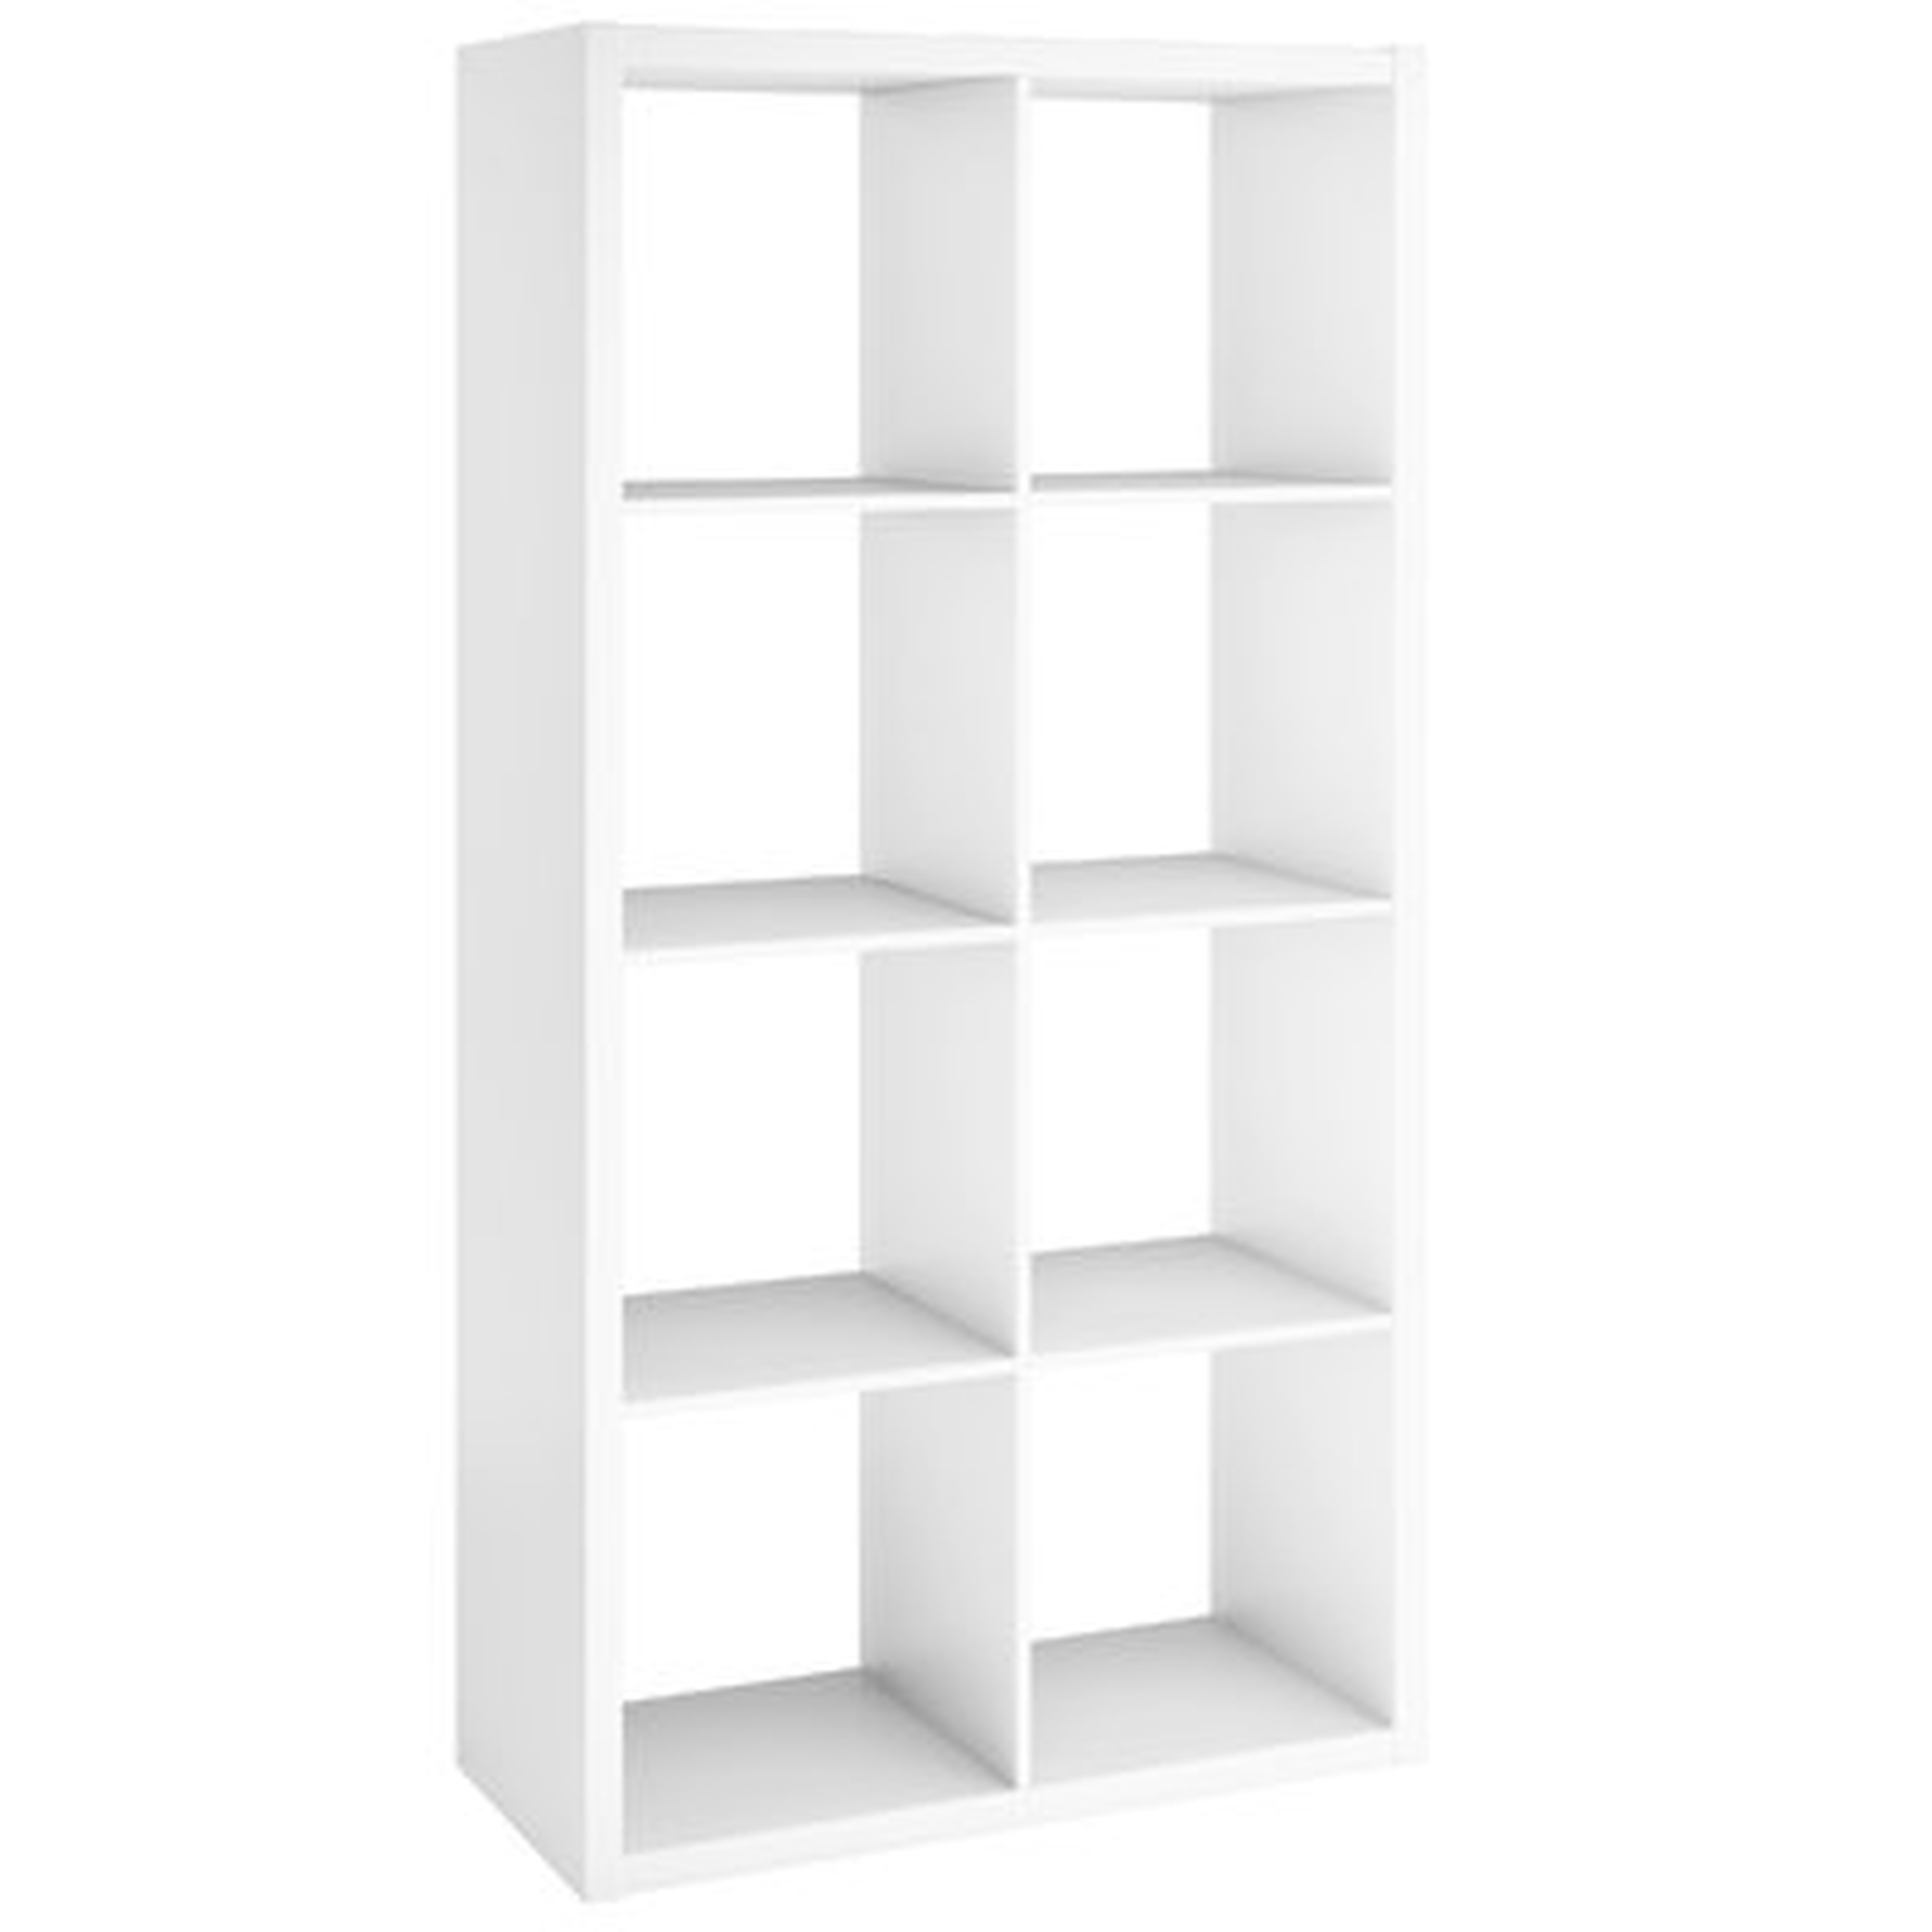 Decorative Cube Bookcase - White - Wayfair